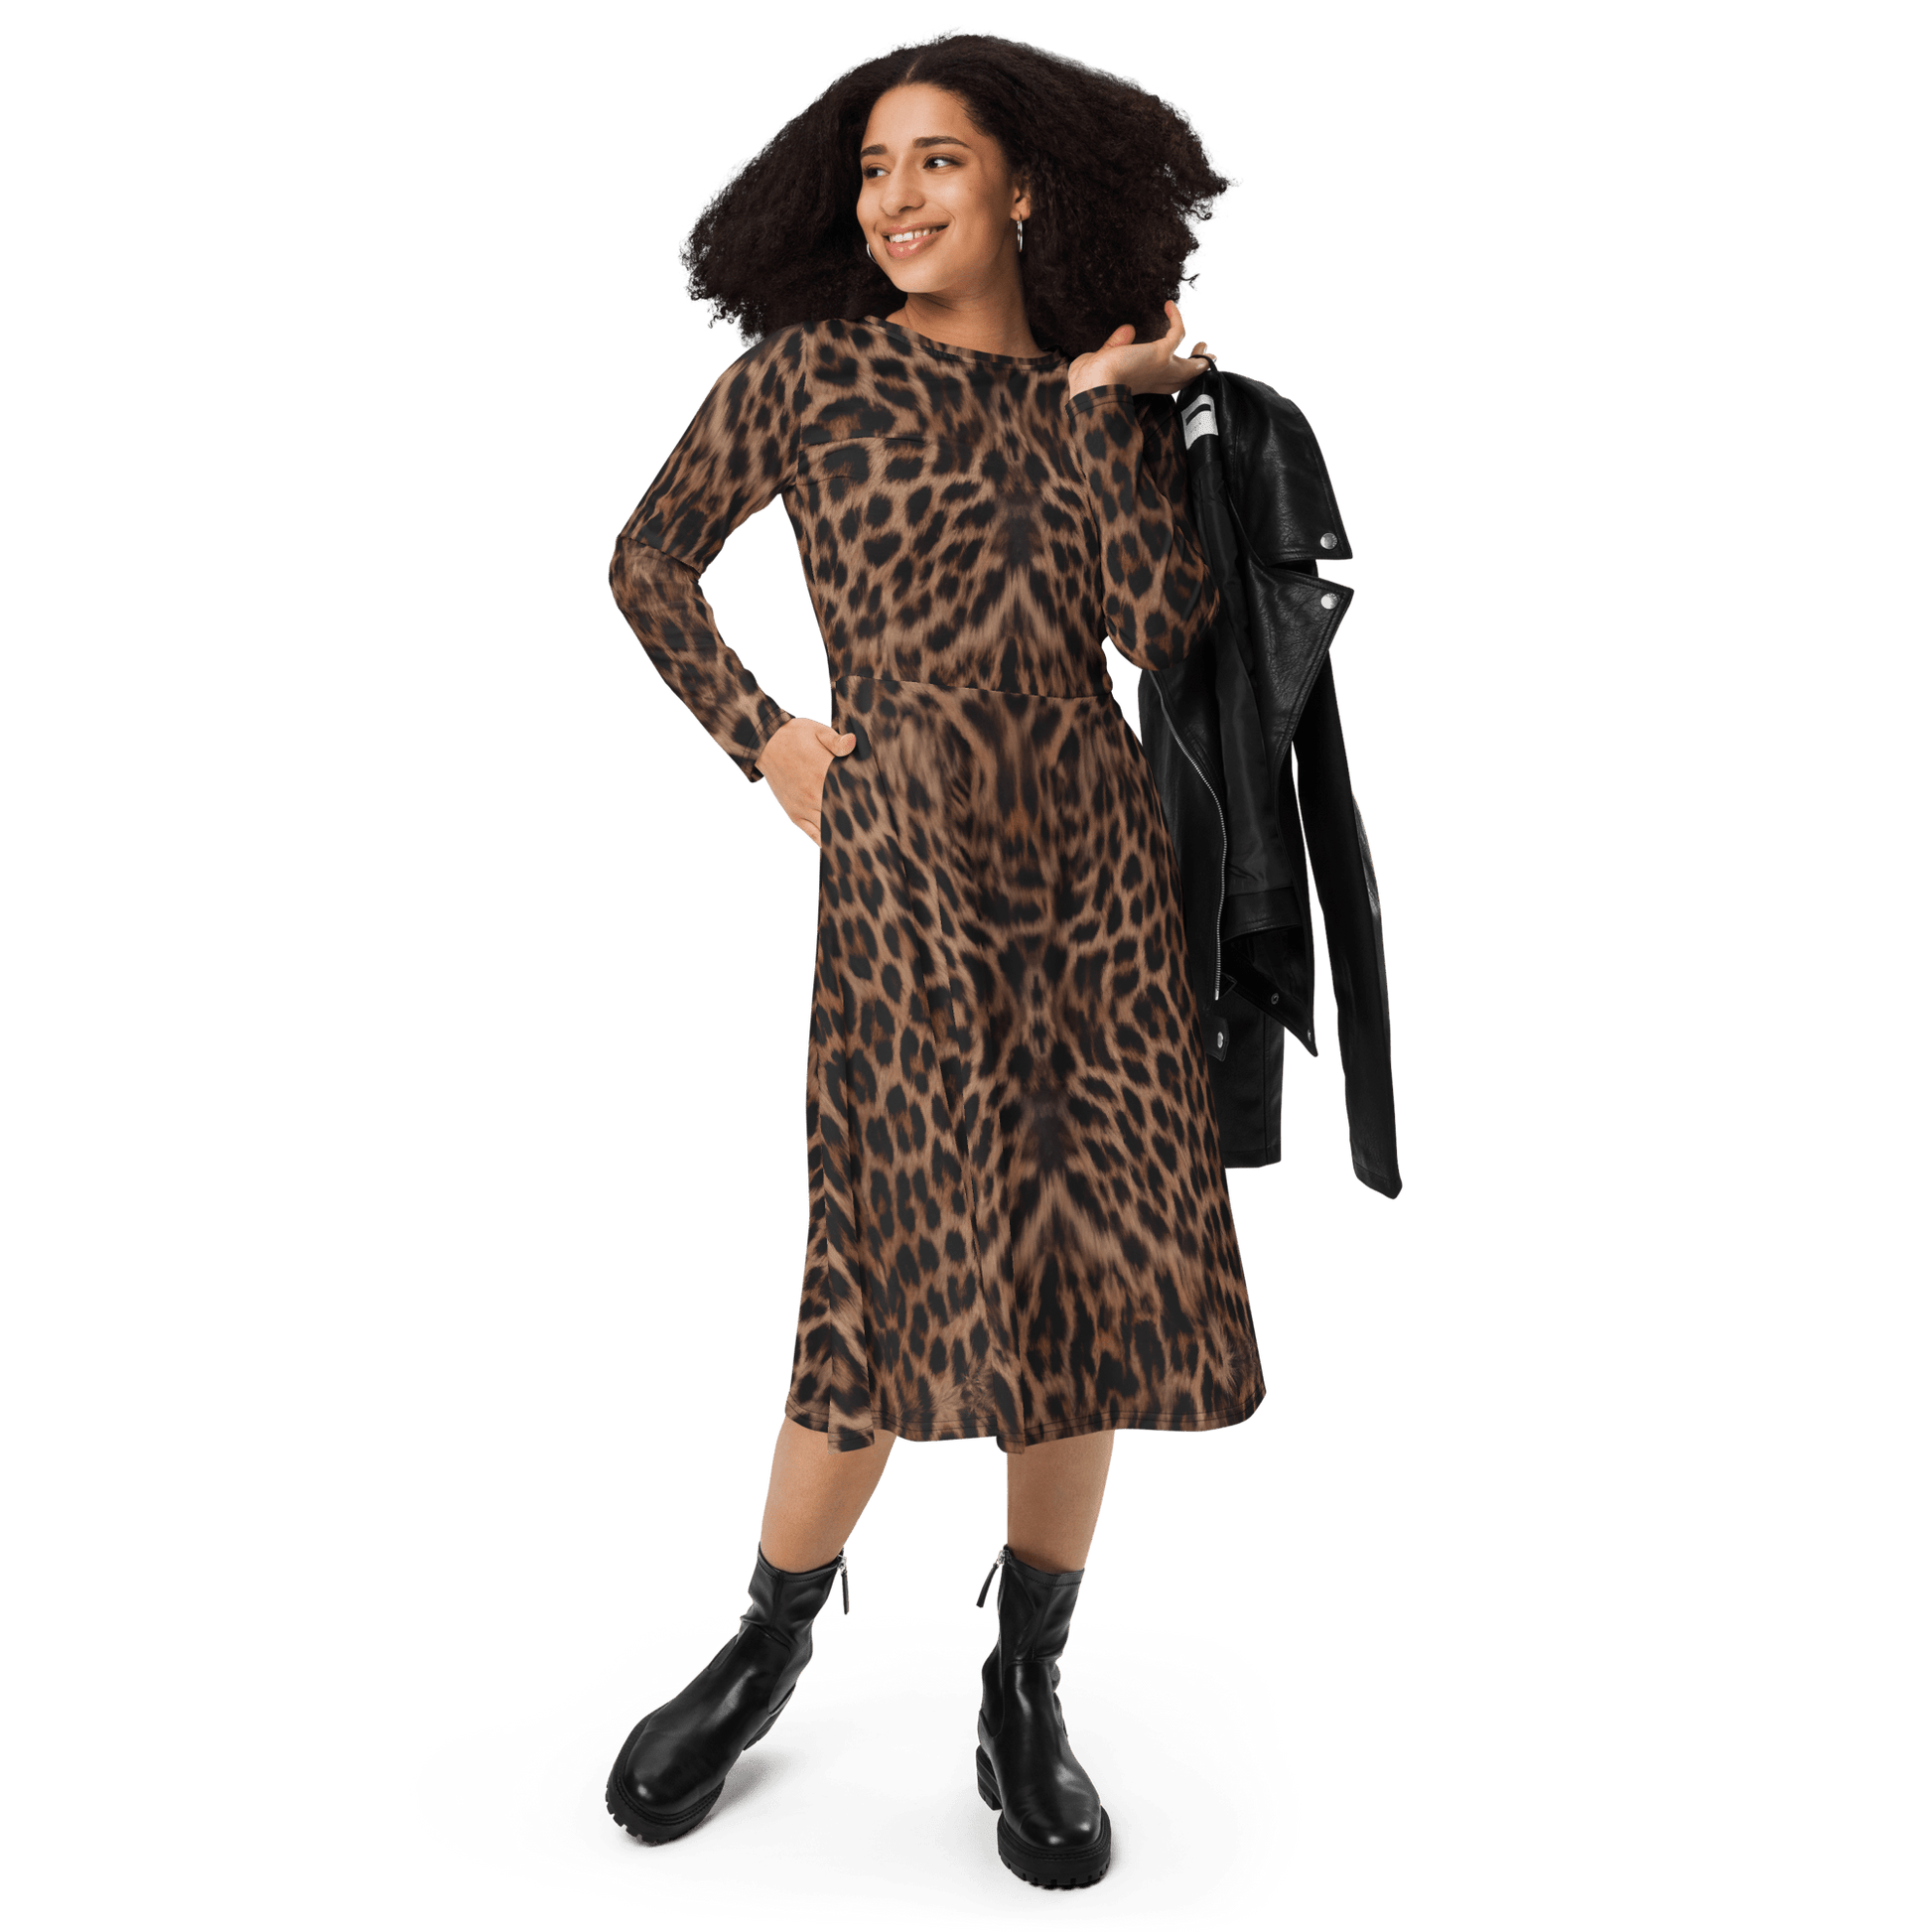 Leopard Forever midi dress - Alfano Dry Goods